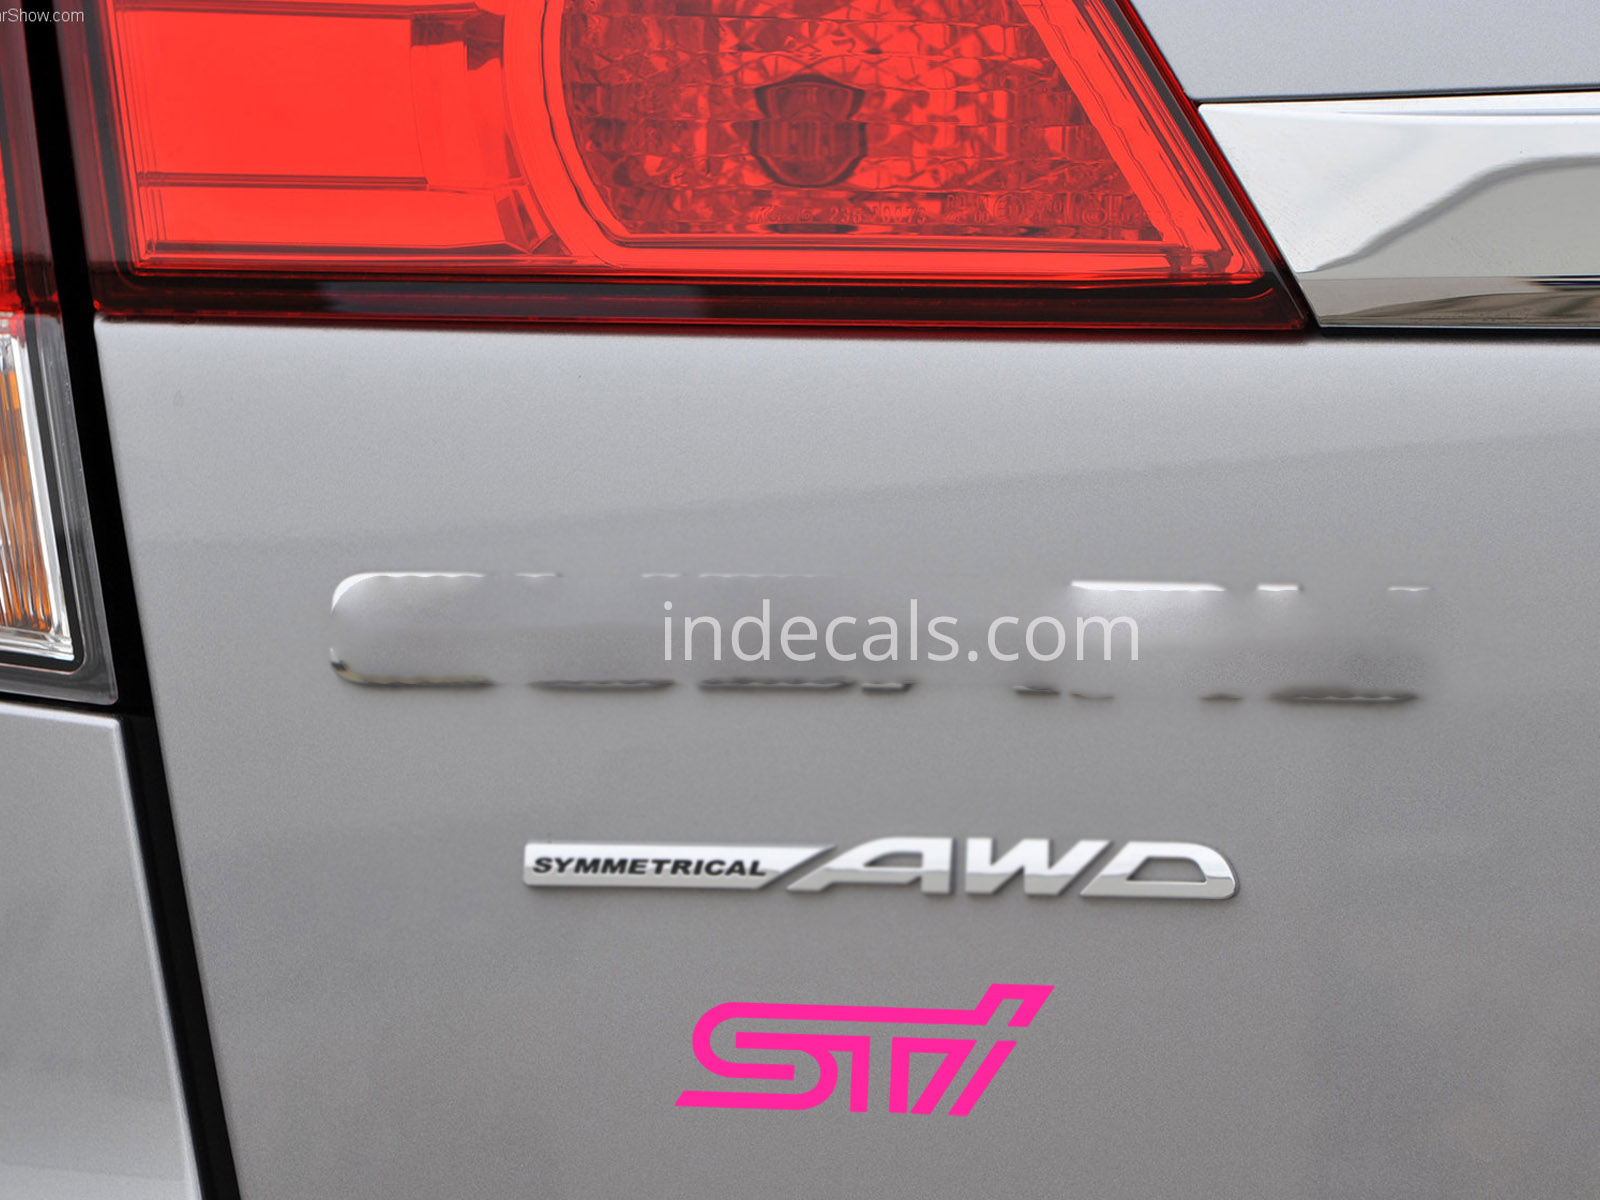 2 x Subaru STI stickers for Trunk - Pink